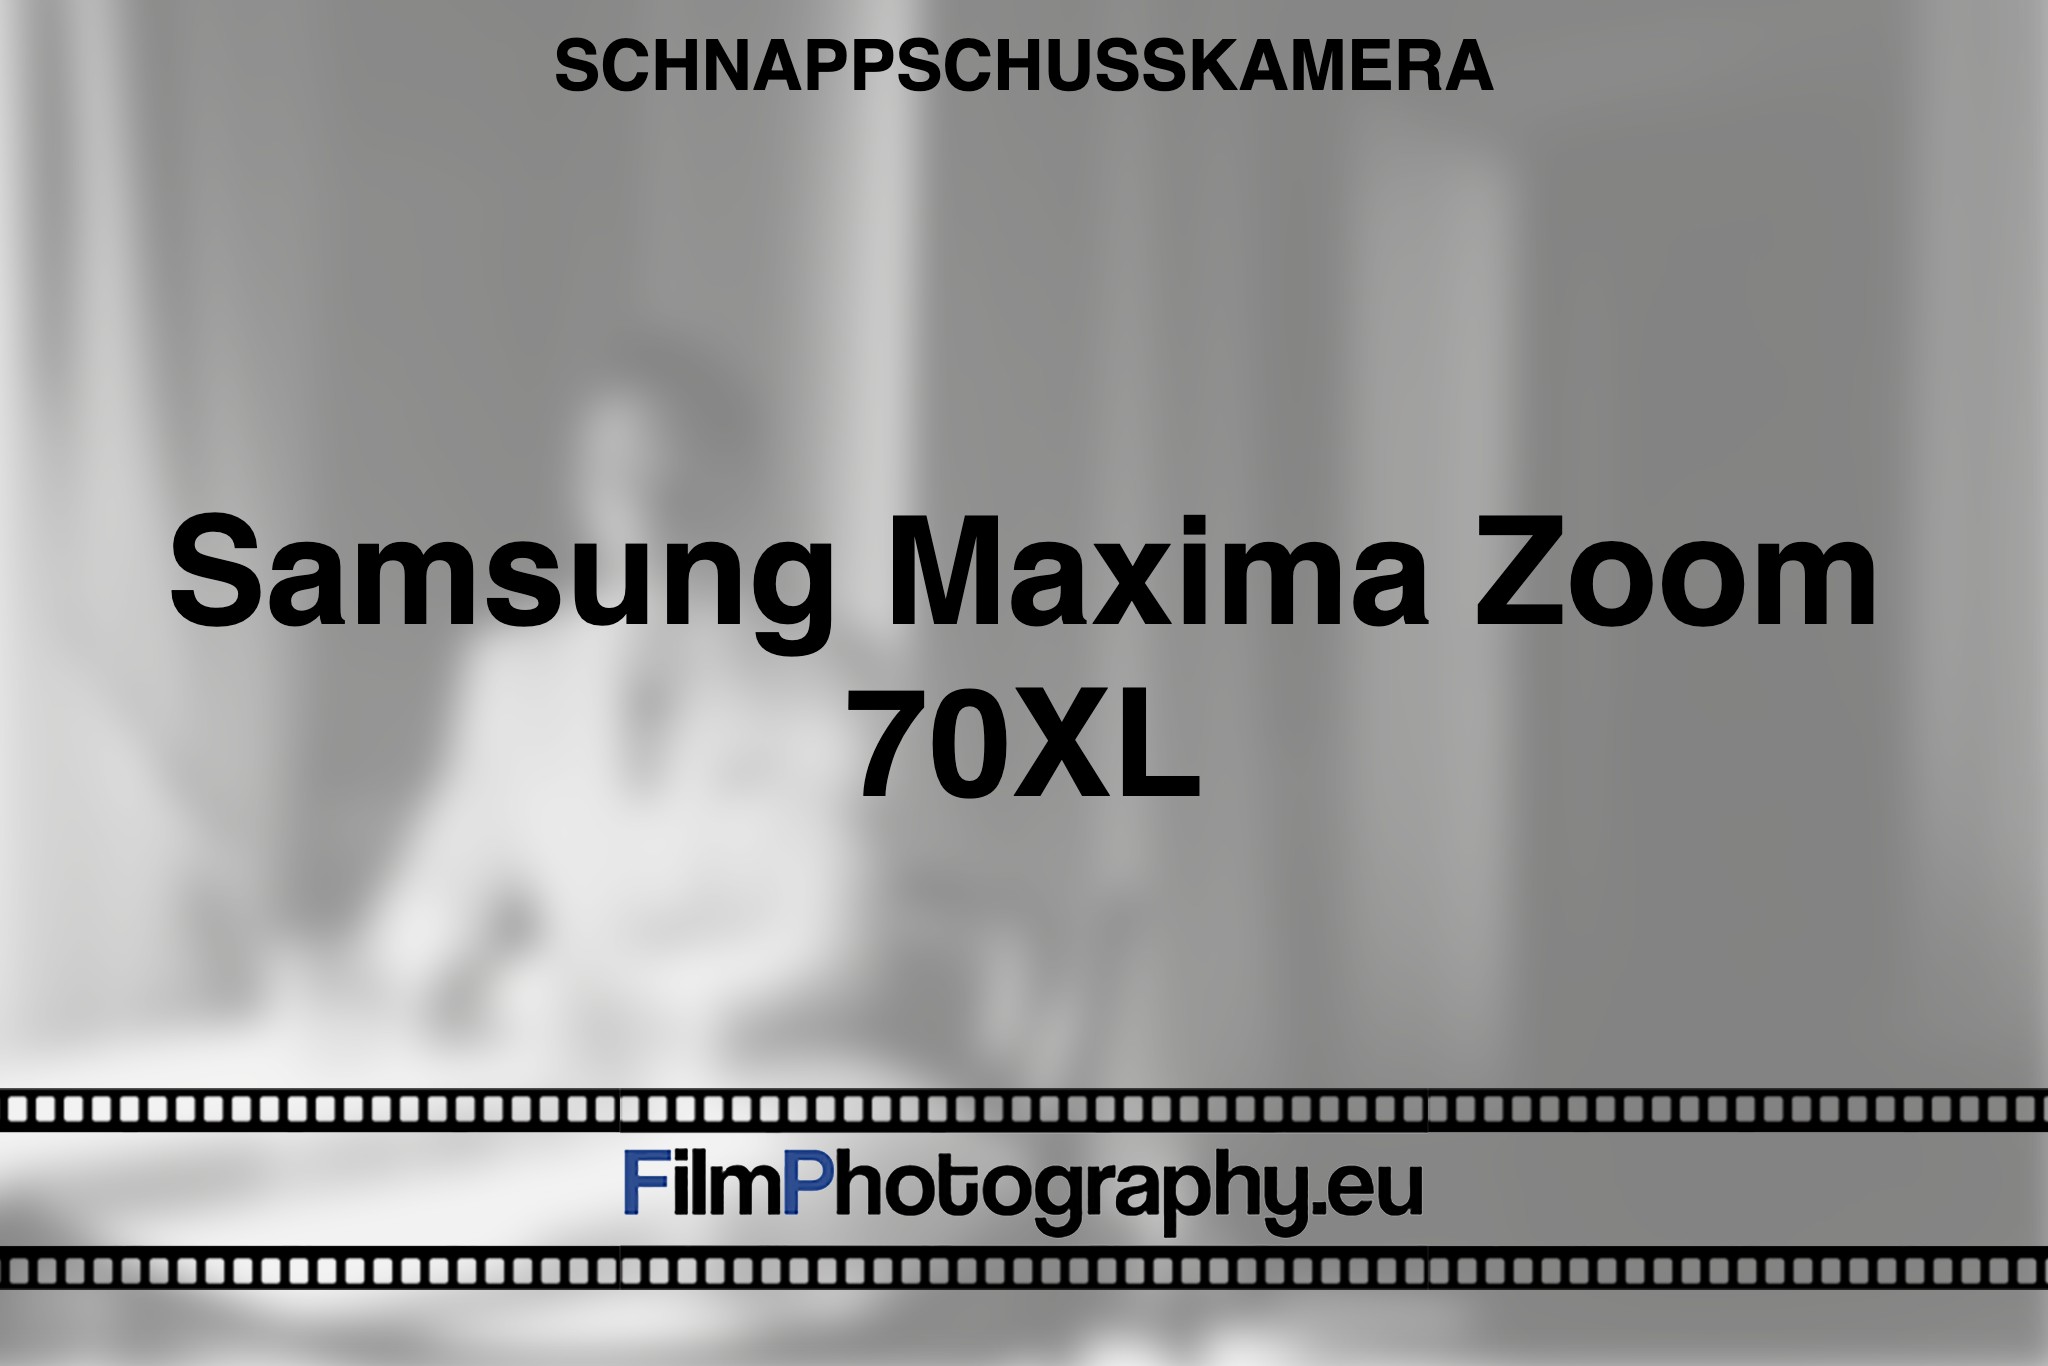 samsung-maxima-zoom-70xl-schnappschusskamera-bnv